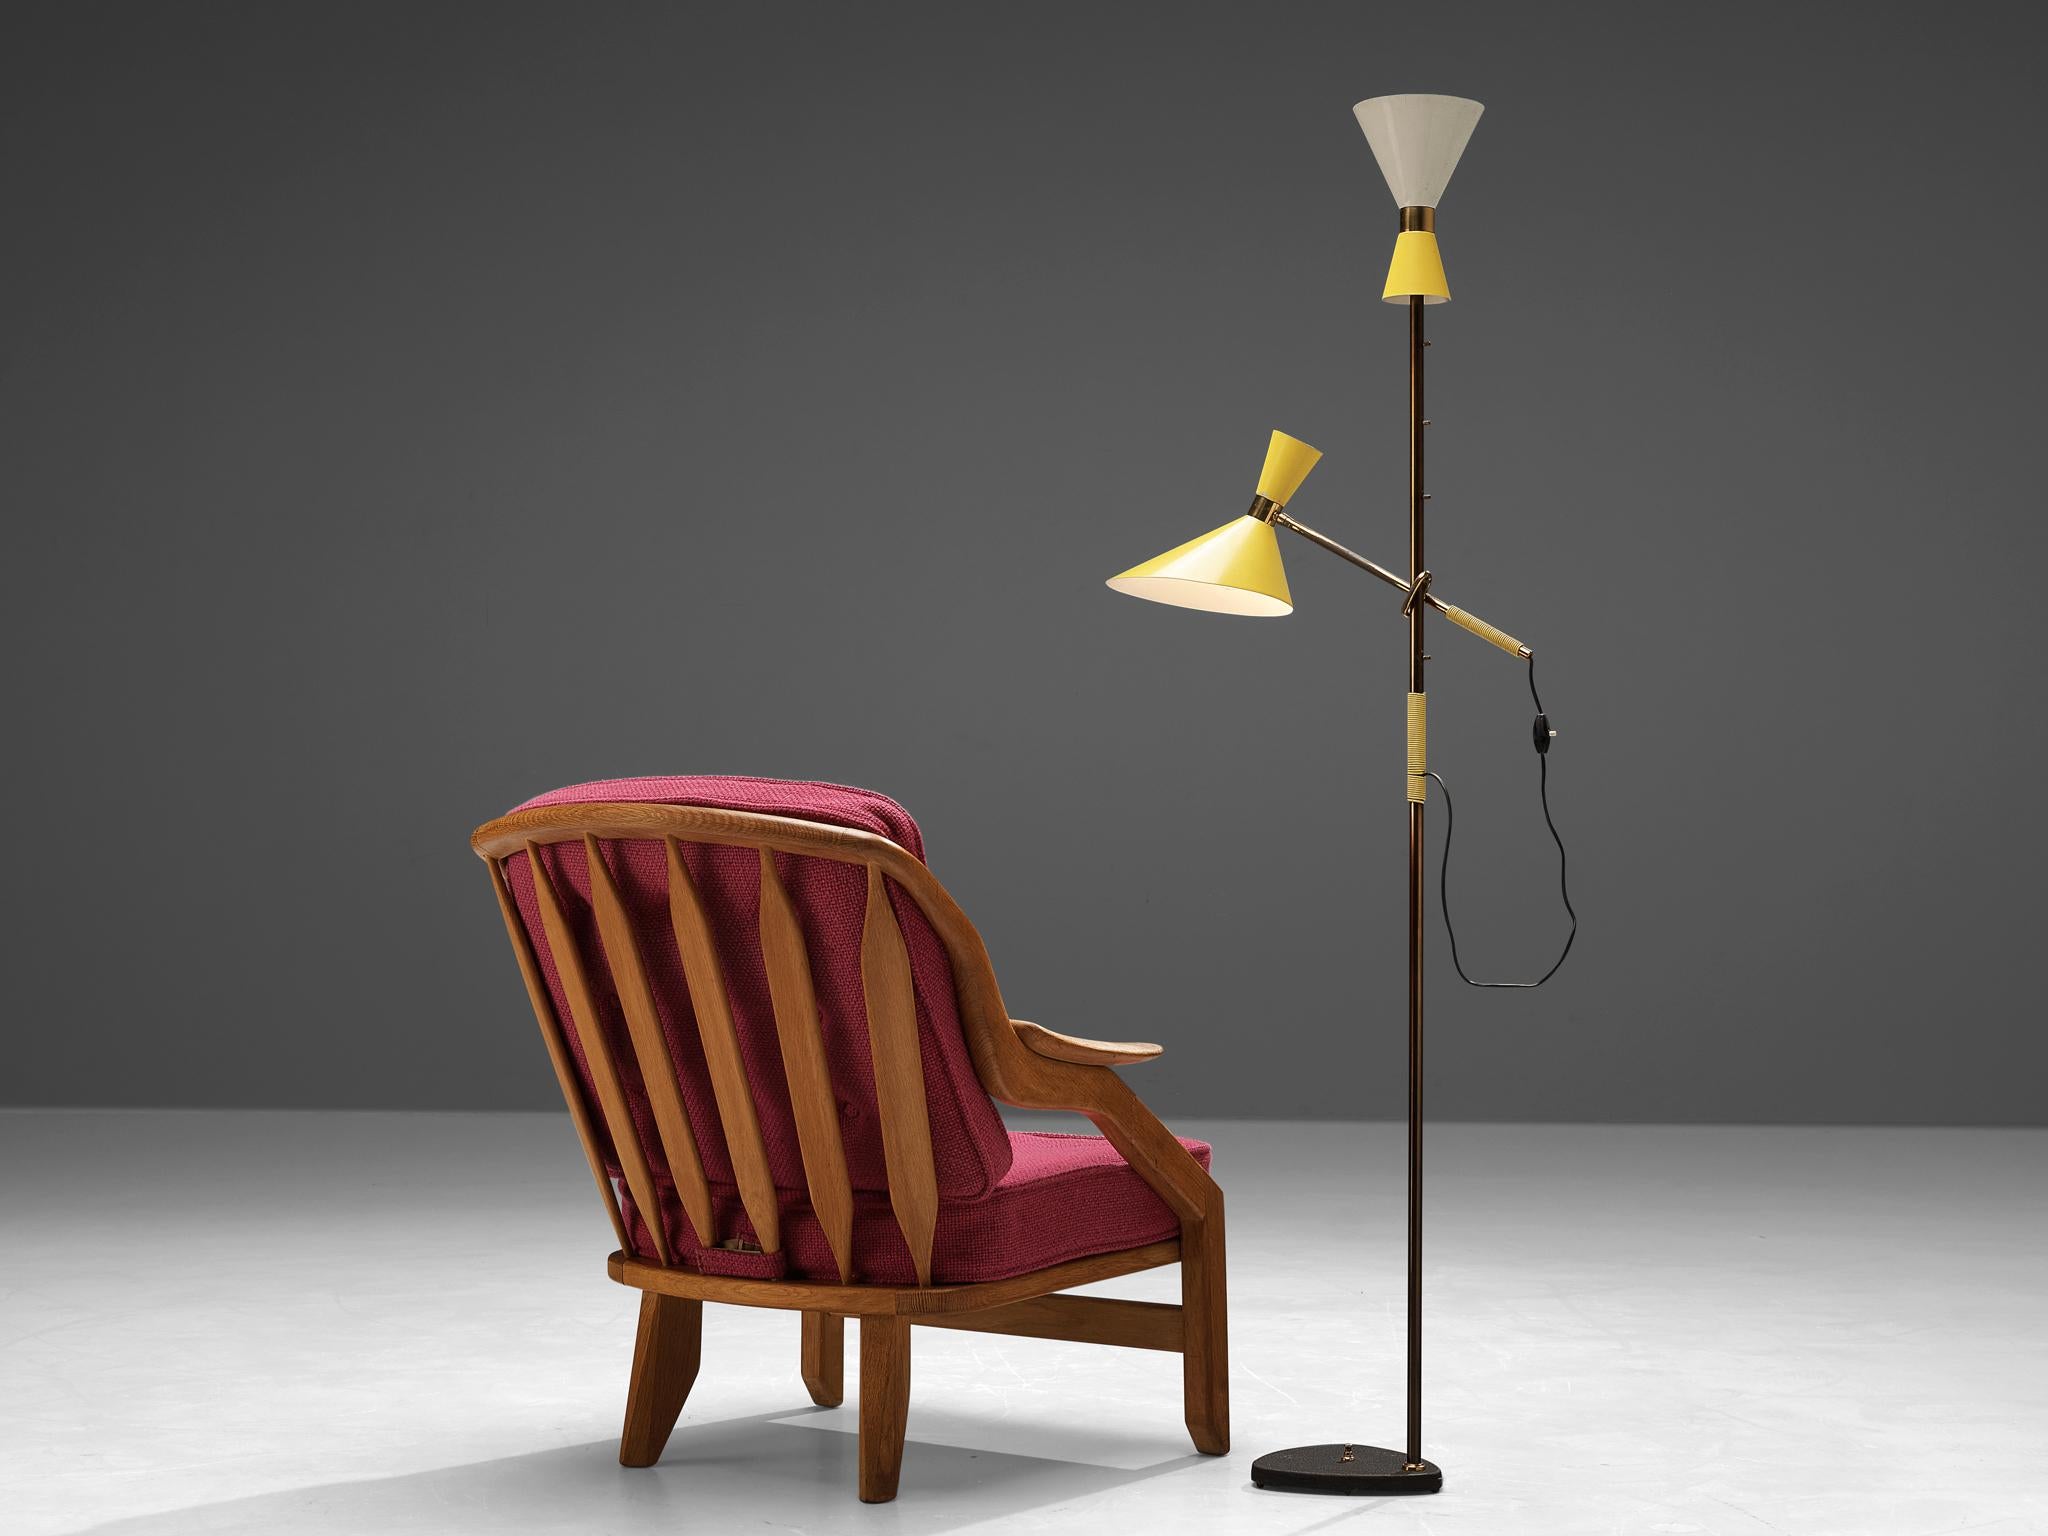 European Guillerme & Chambron Lounge Chair and J.T. Kalmar 'Pelikan' Floor Lamp